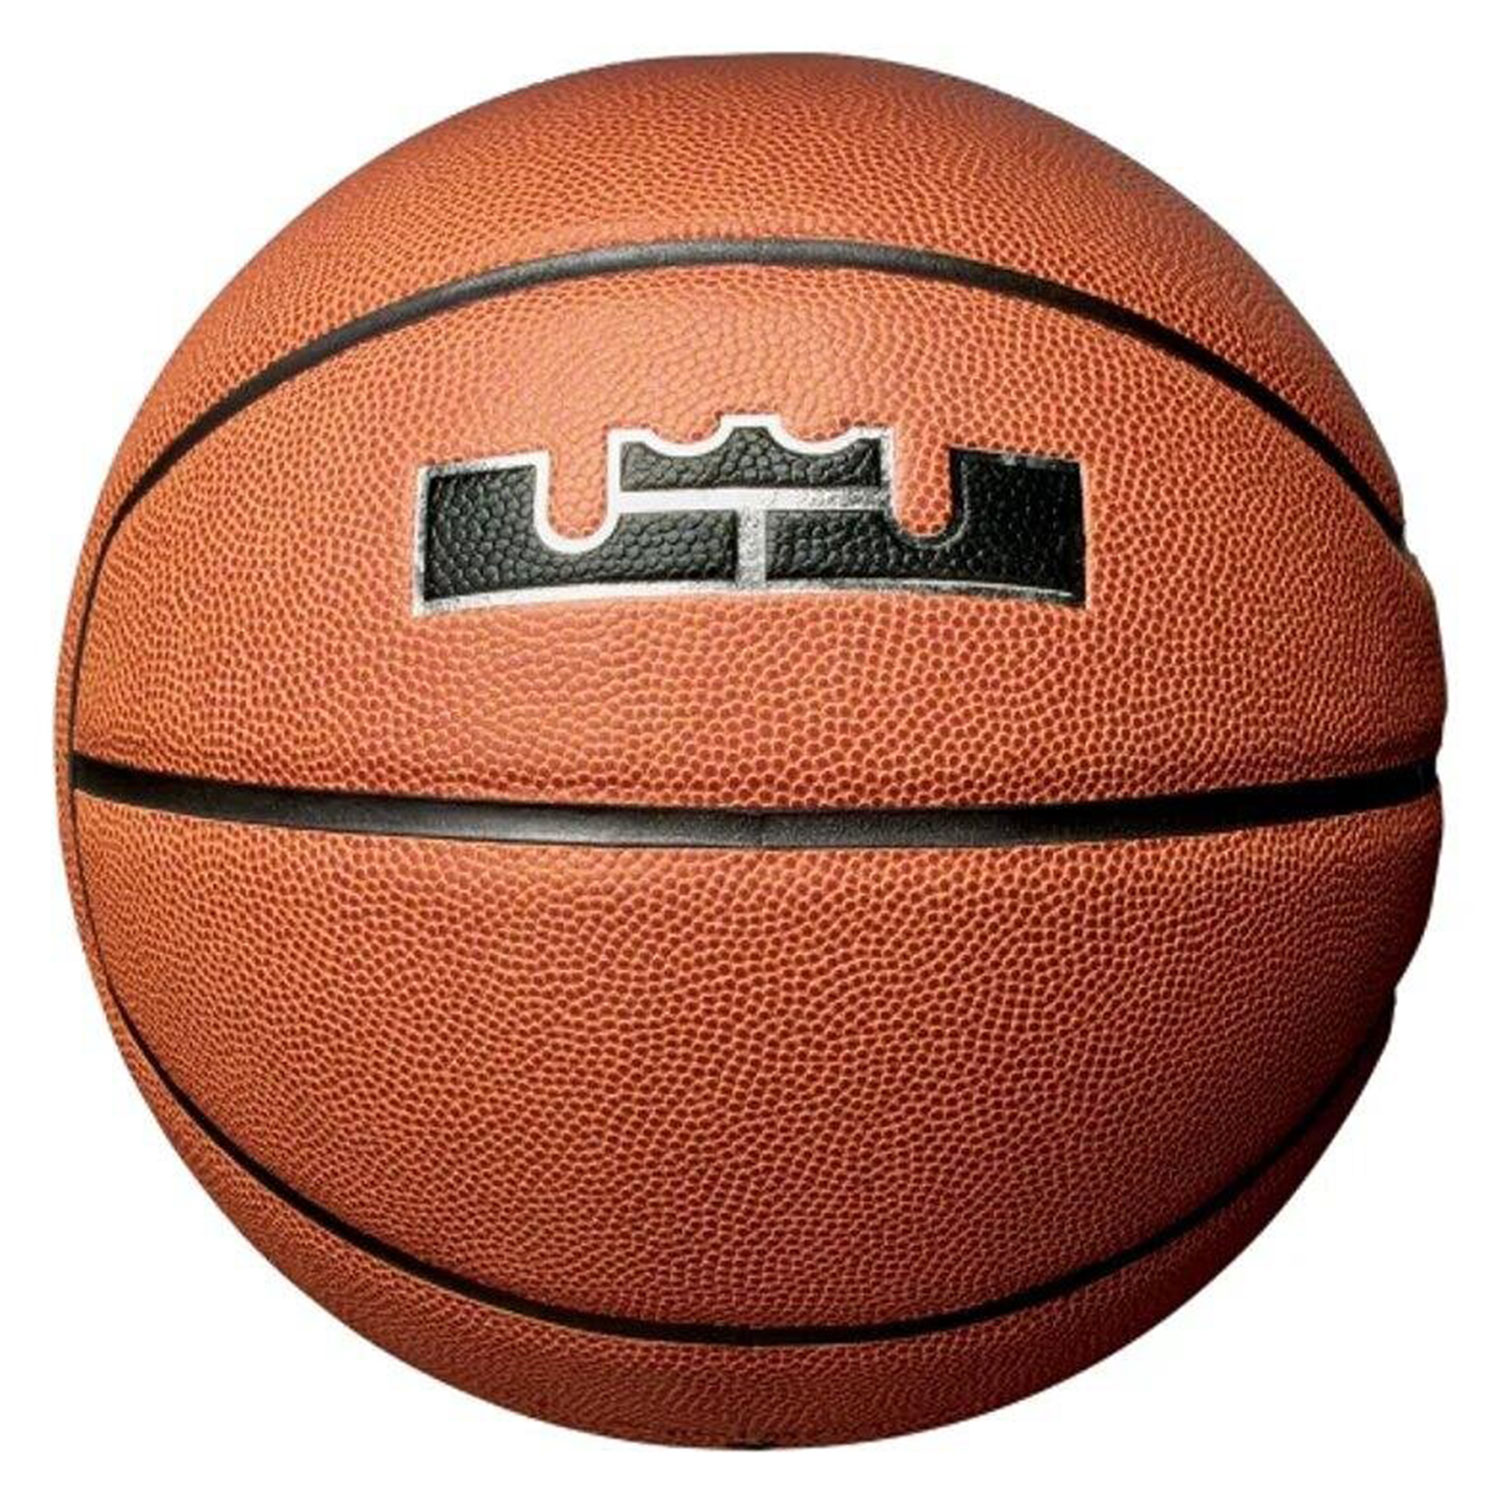 Баскетбольный мяч Nike LeBron All Courts 4P - картинка